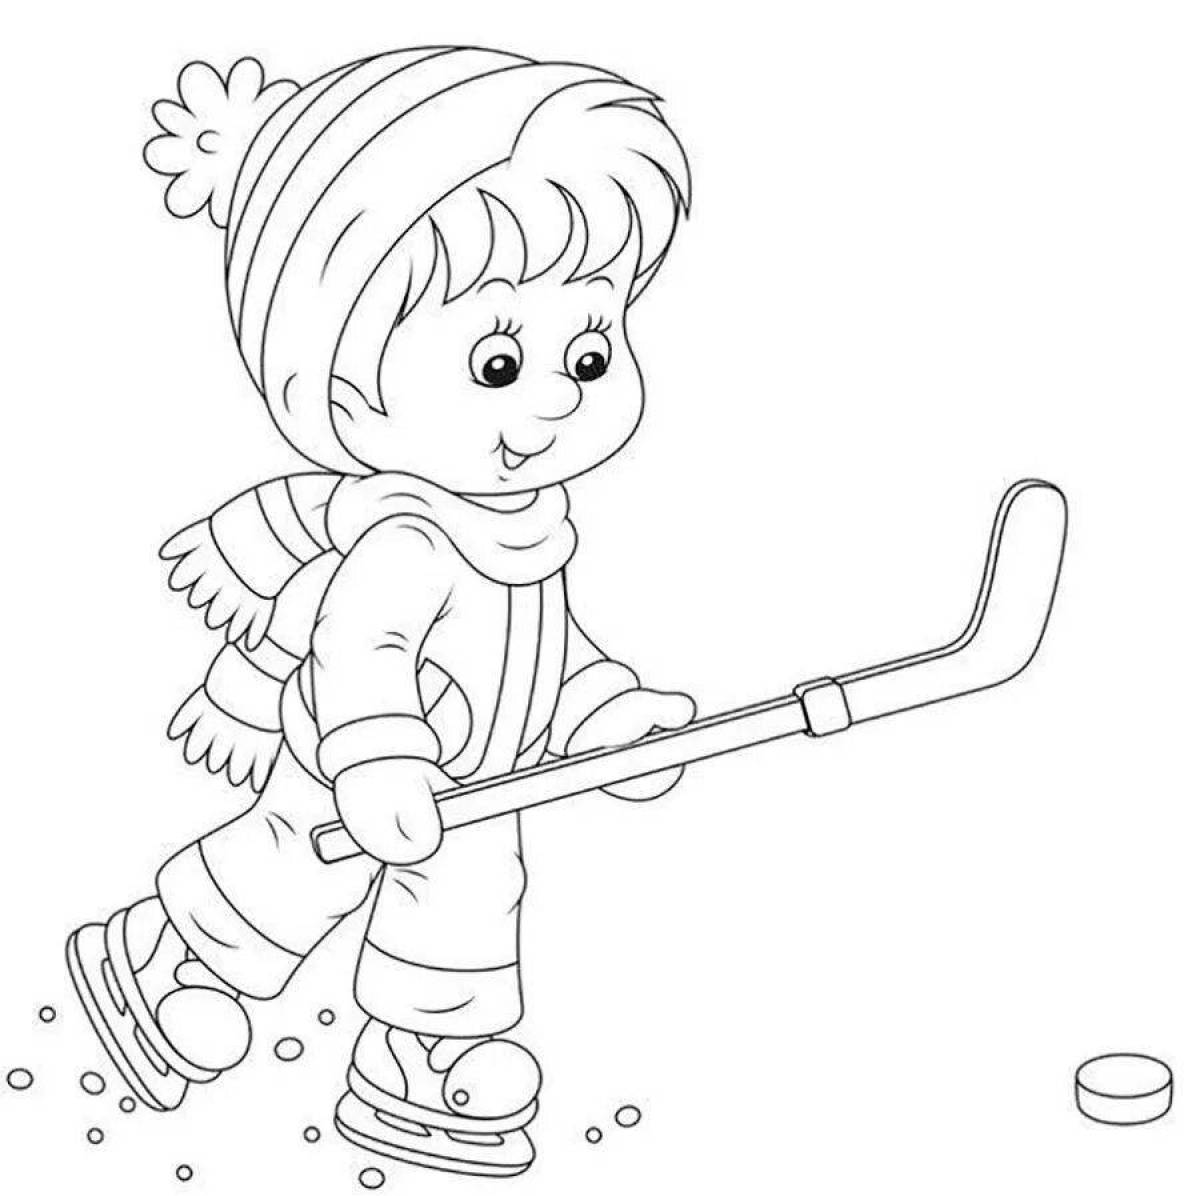 Fun winter coloring for boys